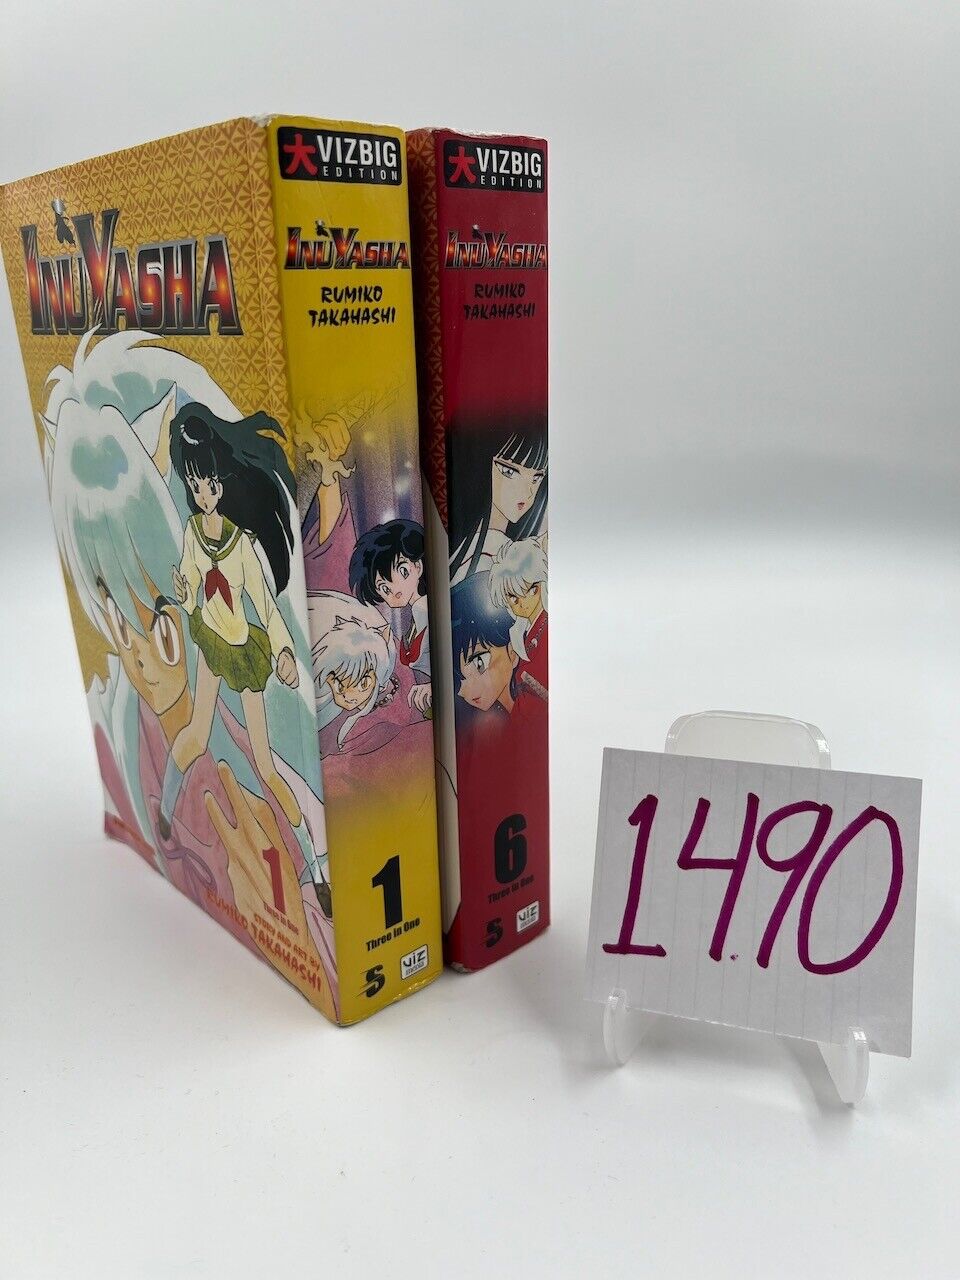 Manga - InuYasha Vol 1, 6, Viz big Editions, 2021/2022 Print Runs